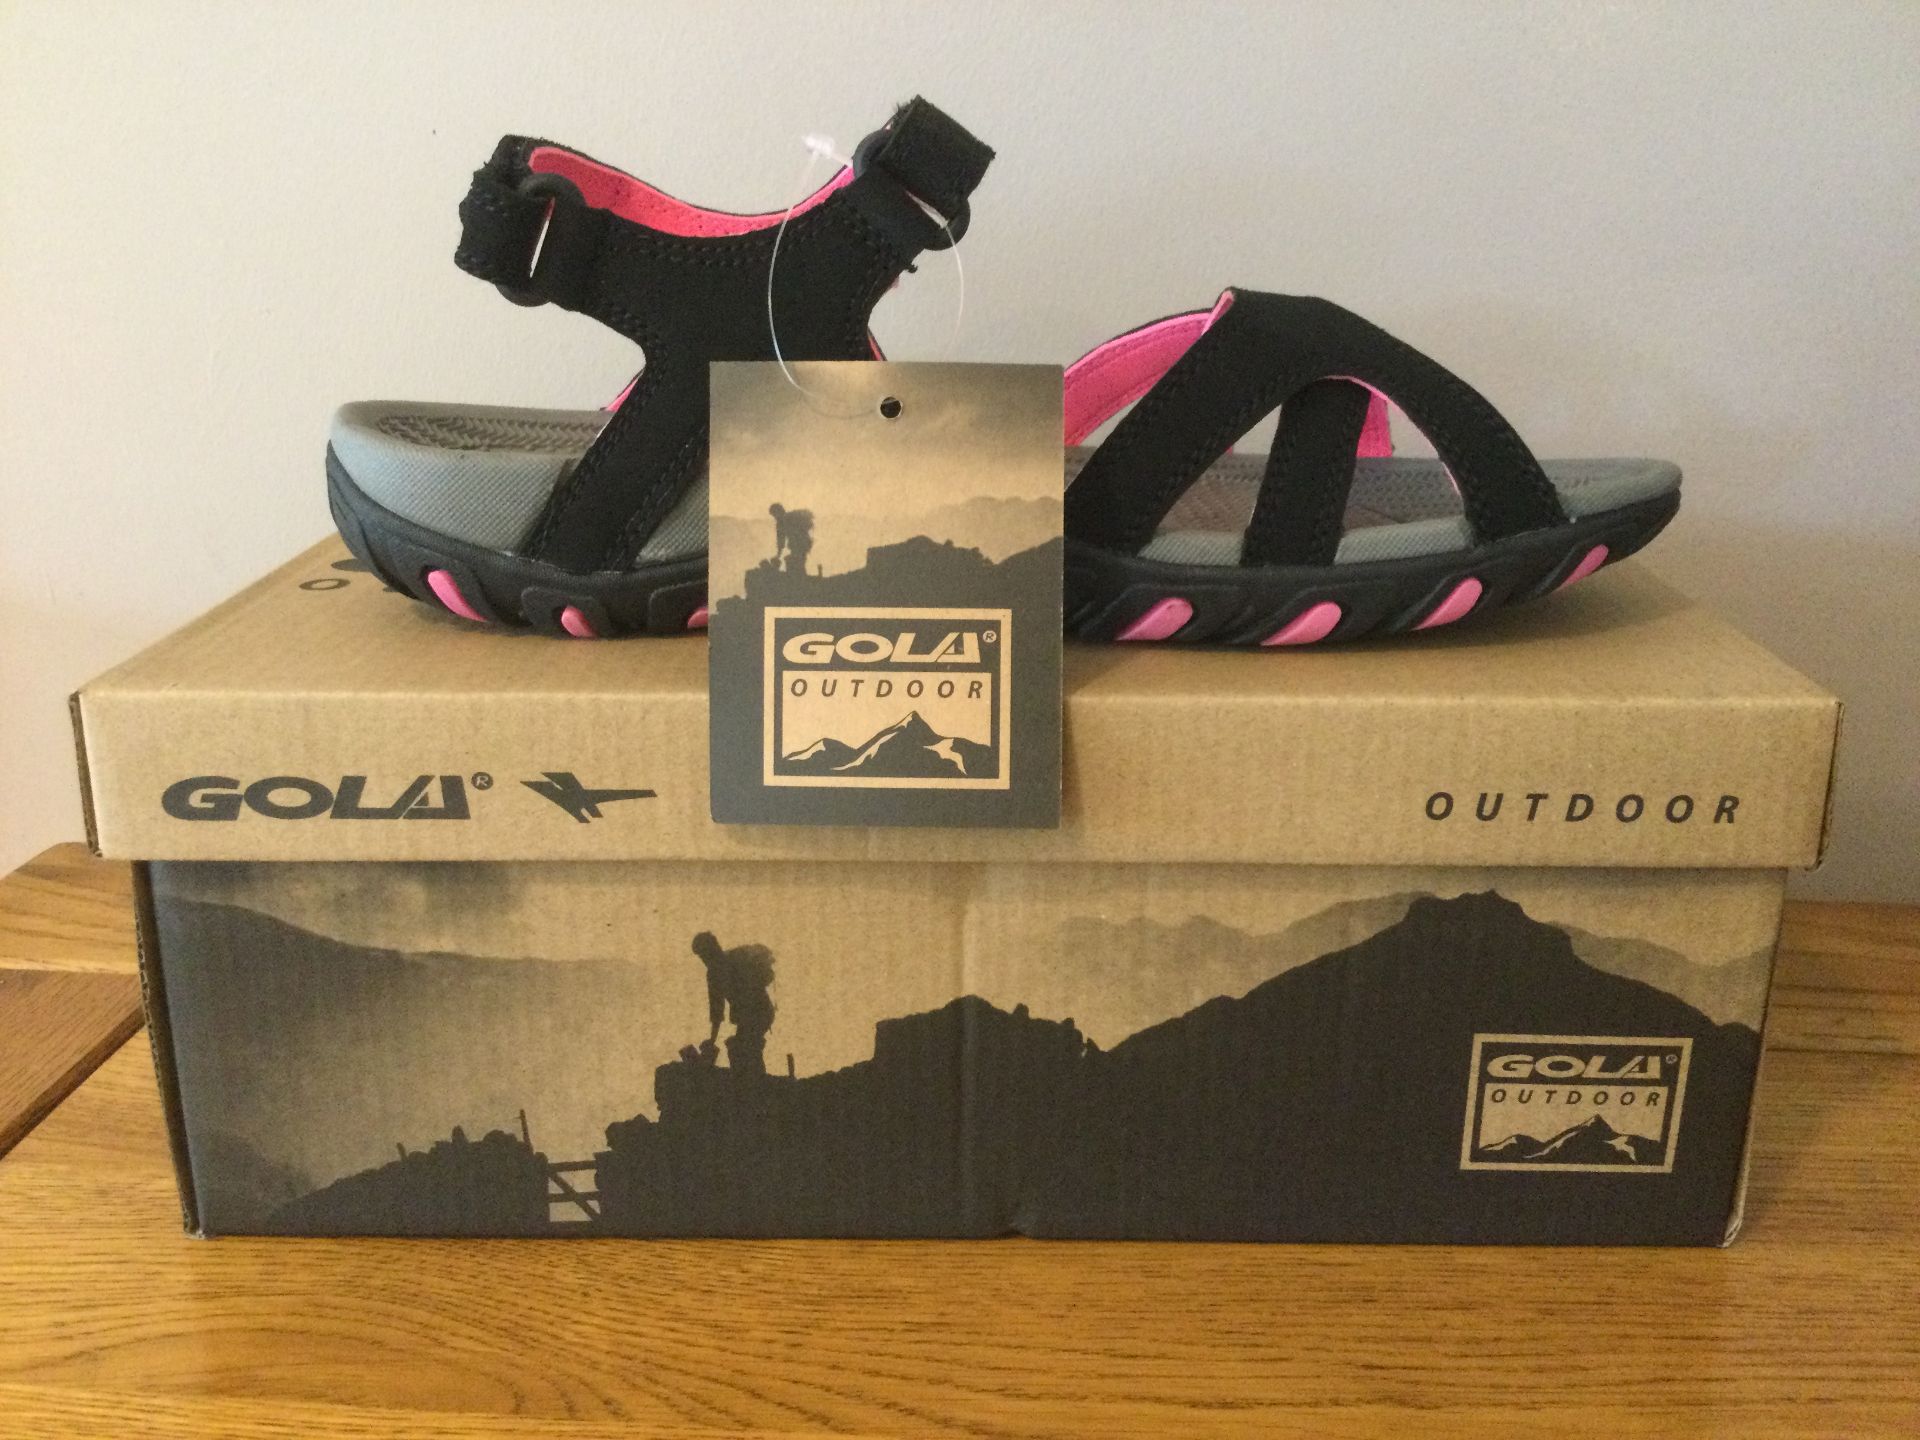 Gola Women's “Cedar” Hiking Sandals, Black/Hot Pink, Size 6 - Brand New - Image 2 of 4